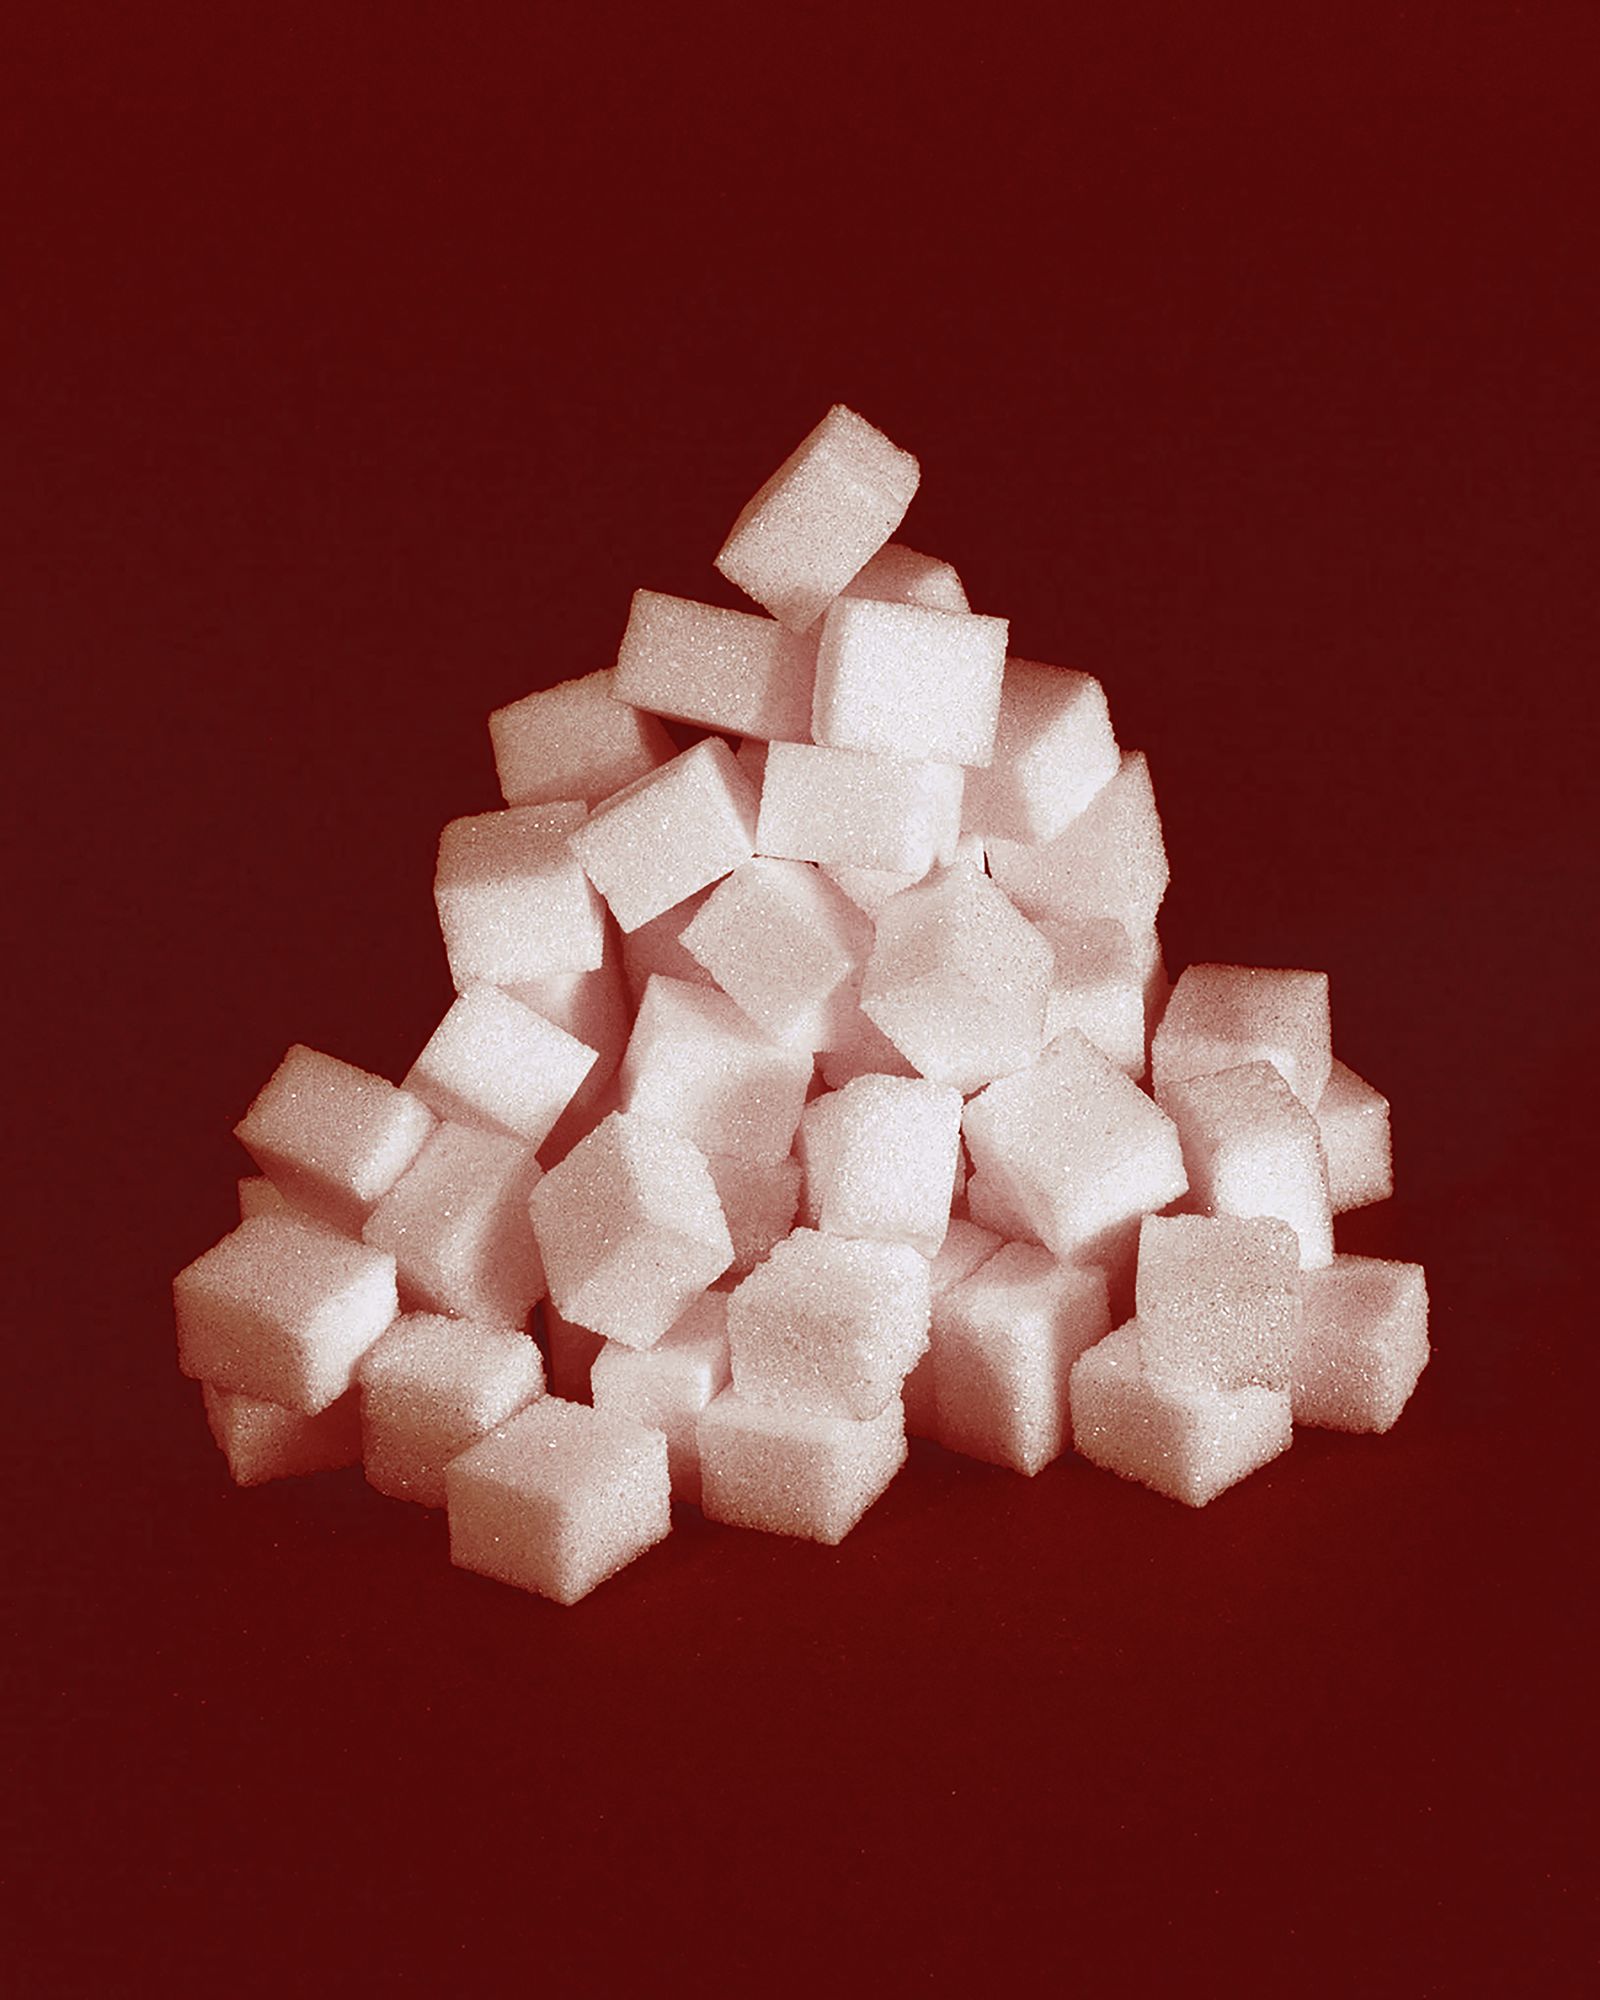 © Anna Tihanyi - Homemaker - Pile of sugar